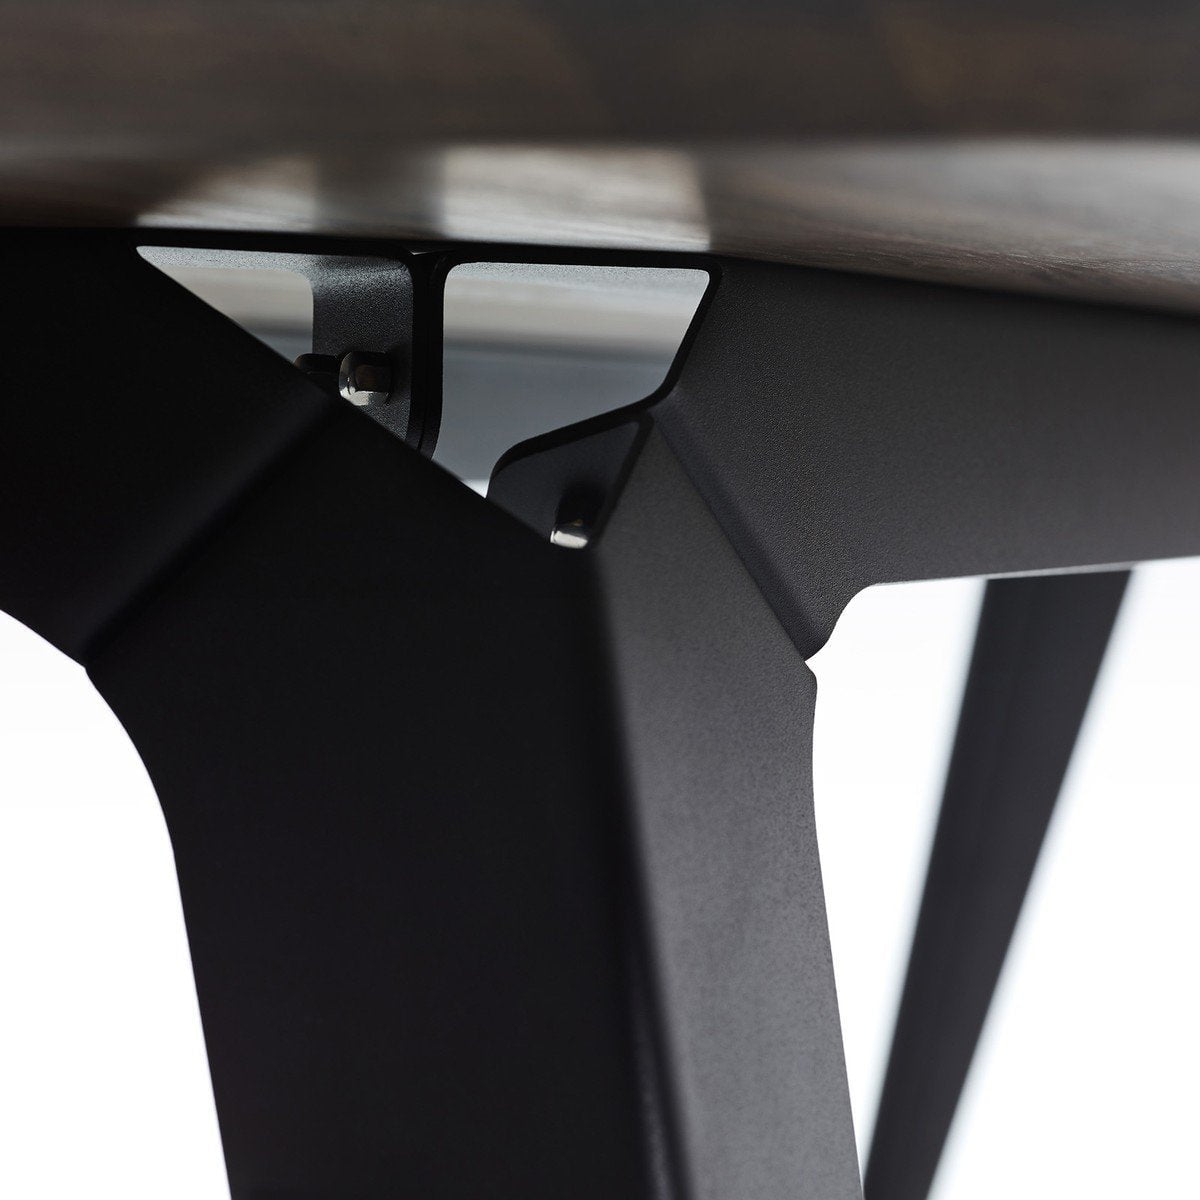 Puik Fold Dining Table 200x95cm, Black / Naturel